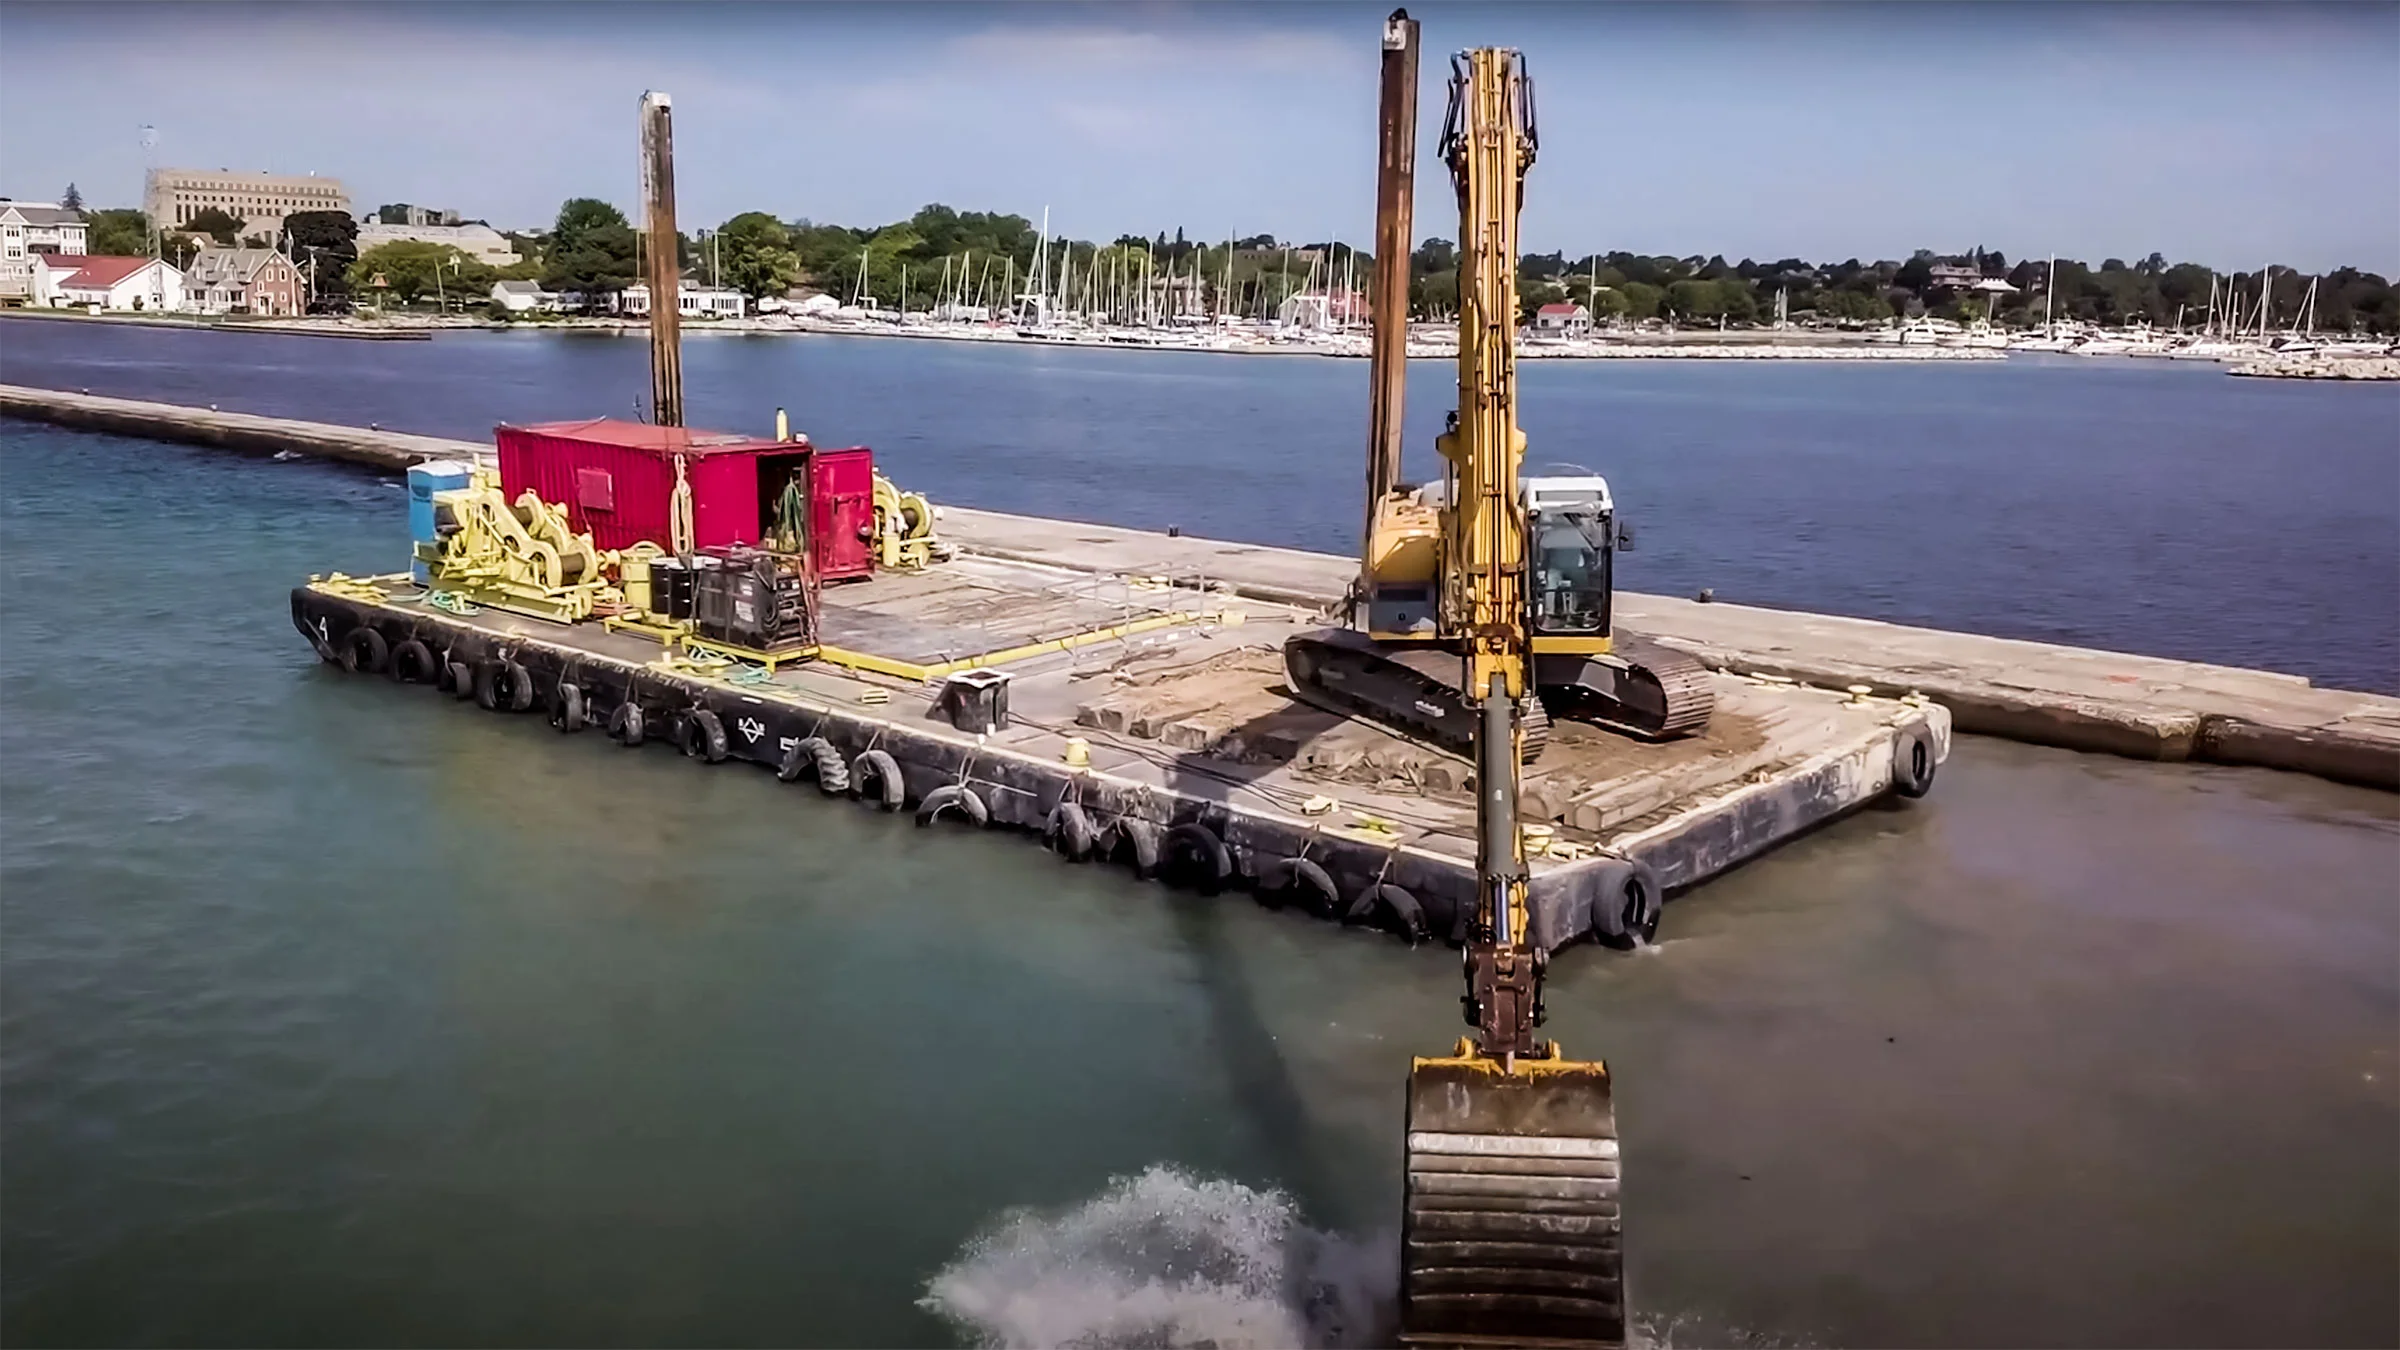 A large excavator machine digs into Lake Michigan